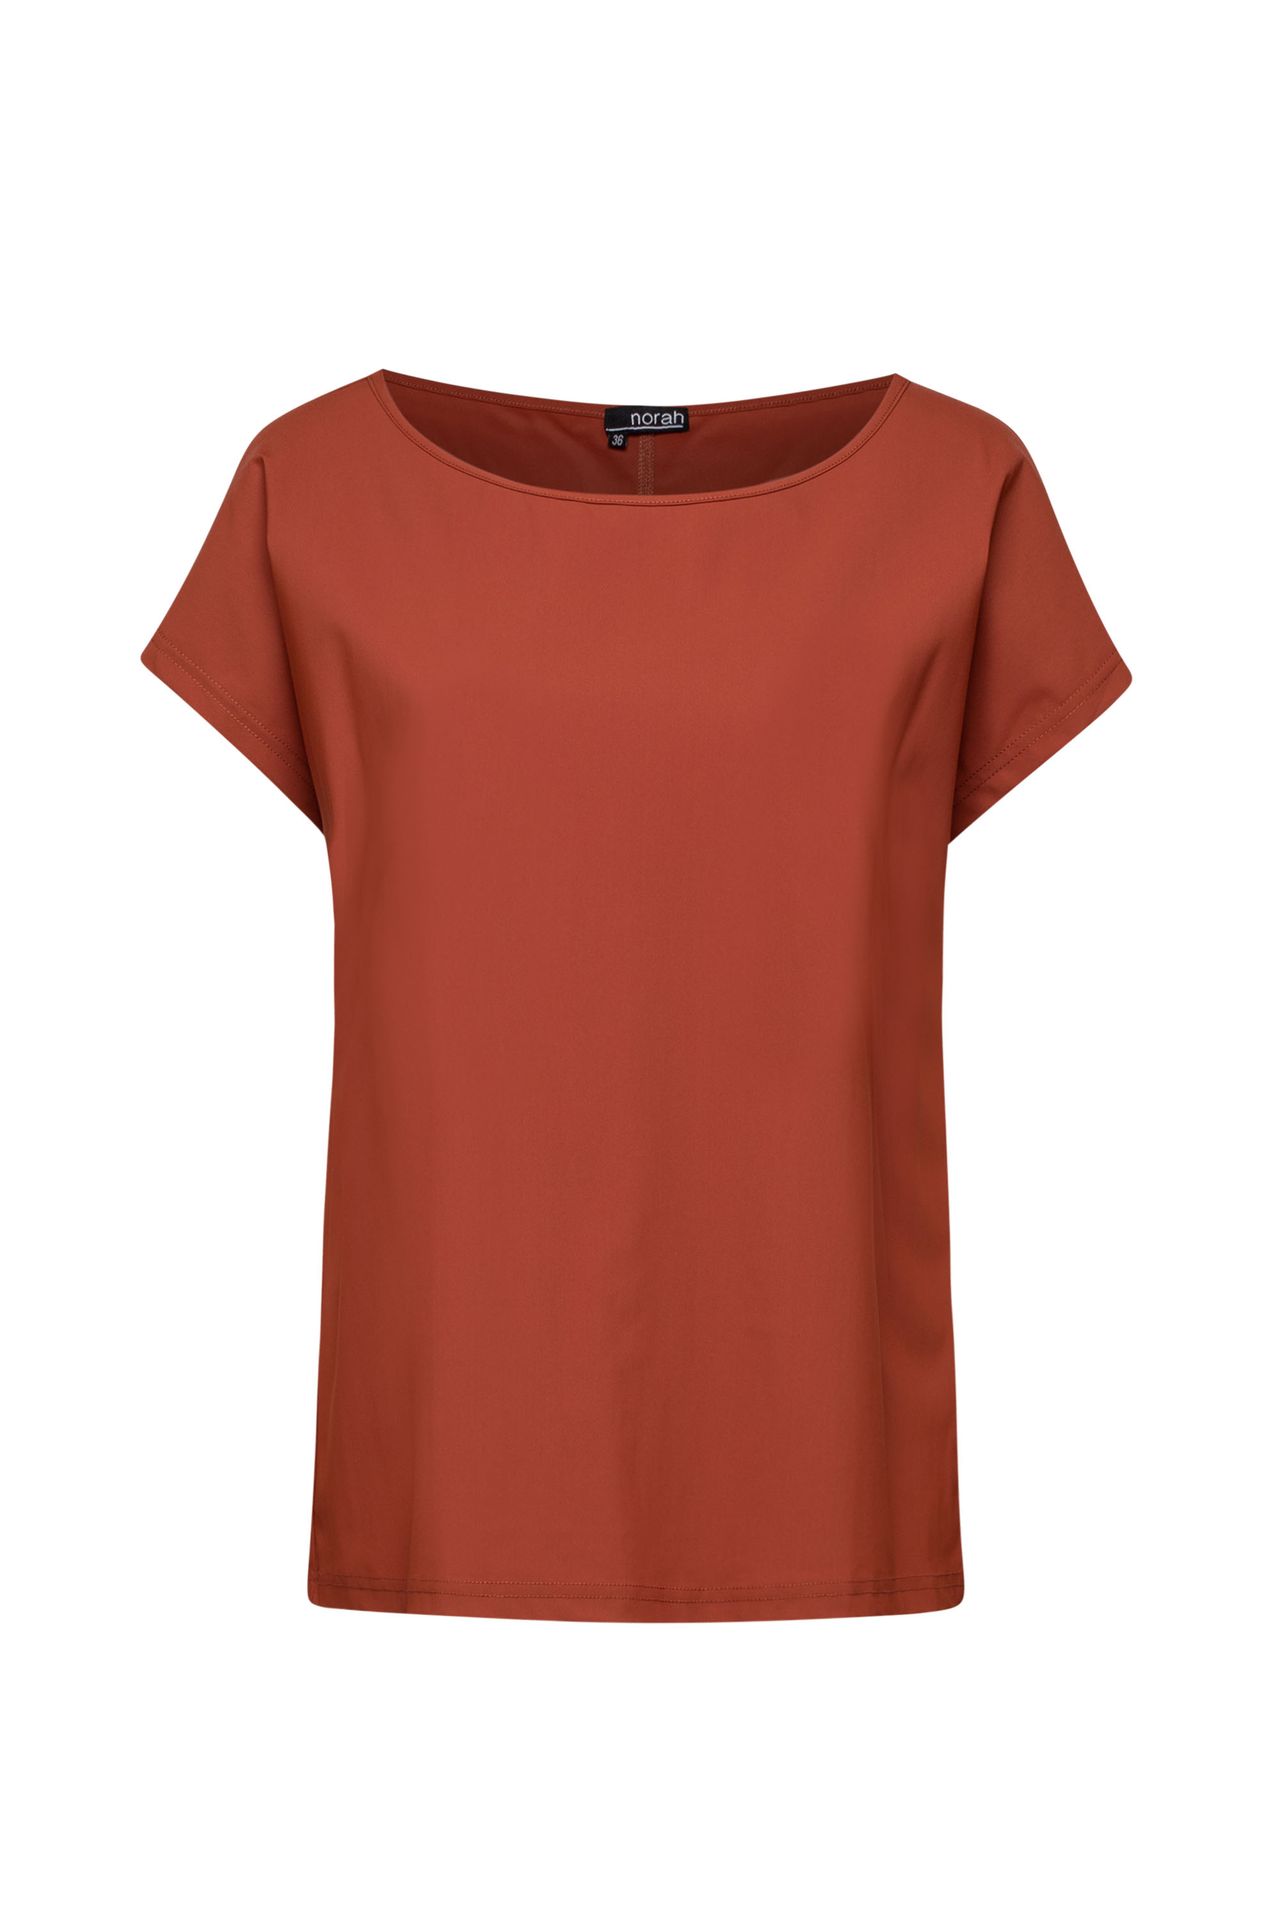 Norah Shirt bruin travelstof brown 211418-200